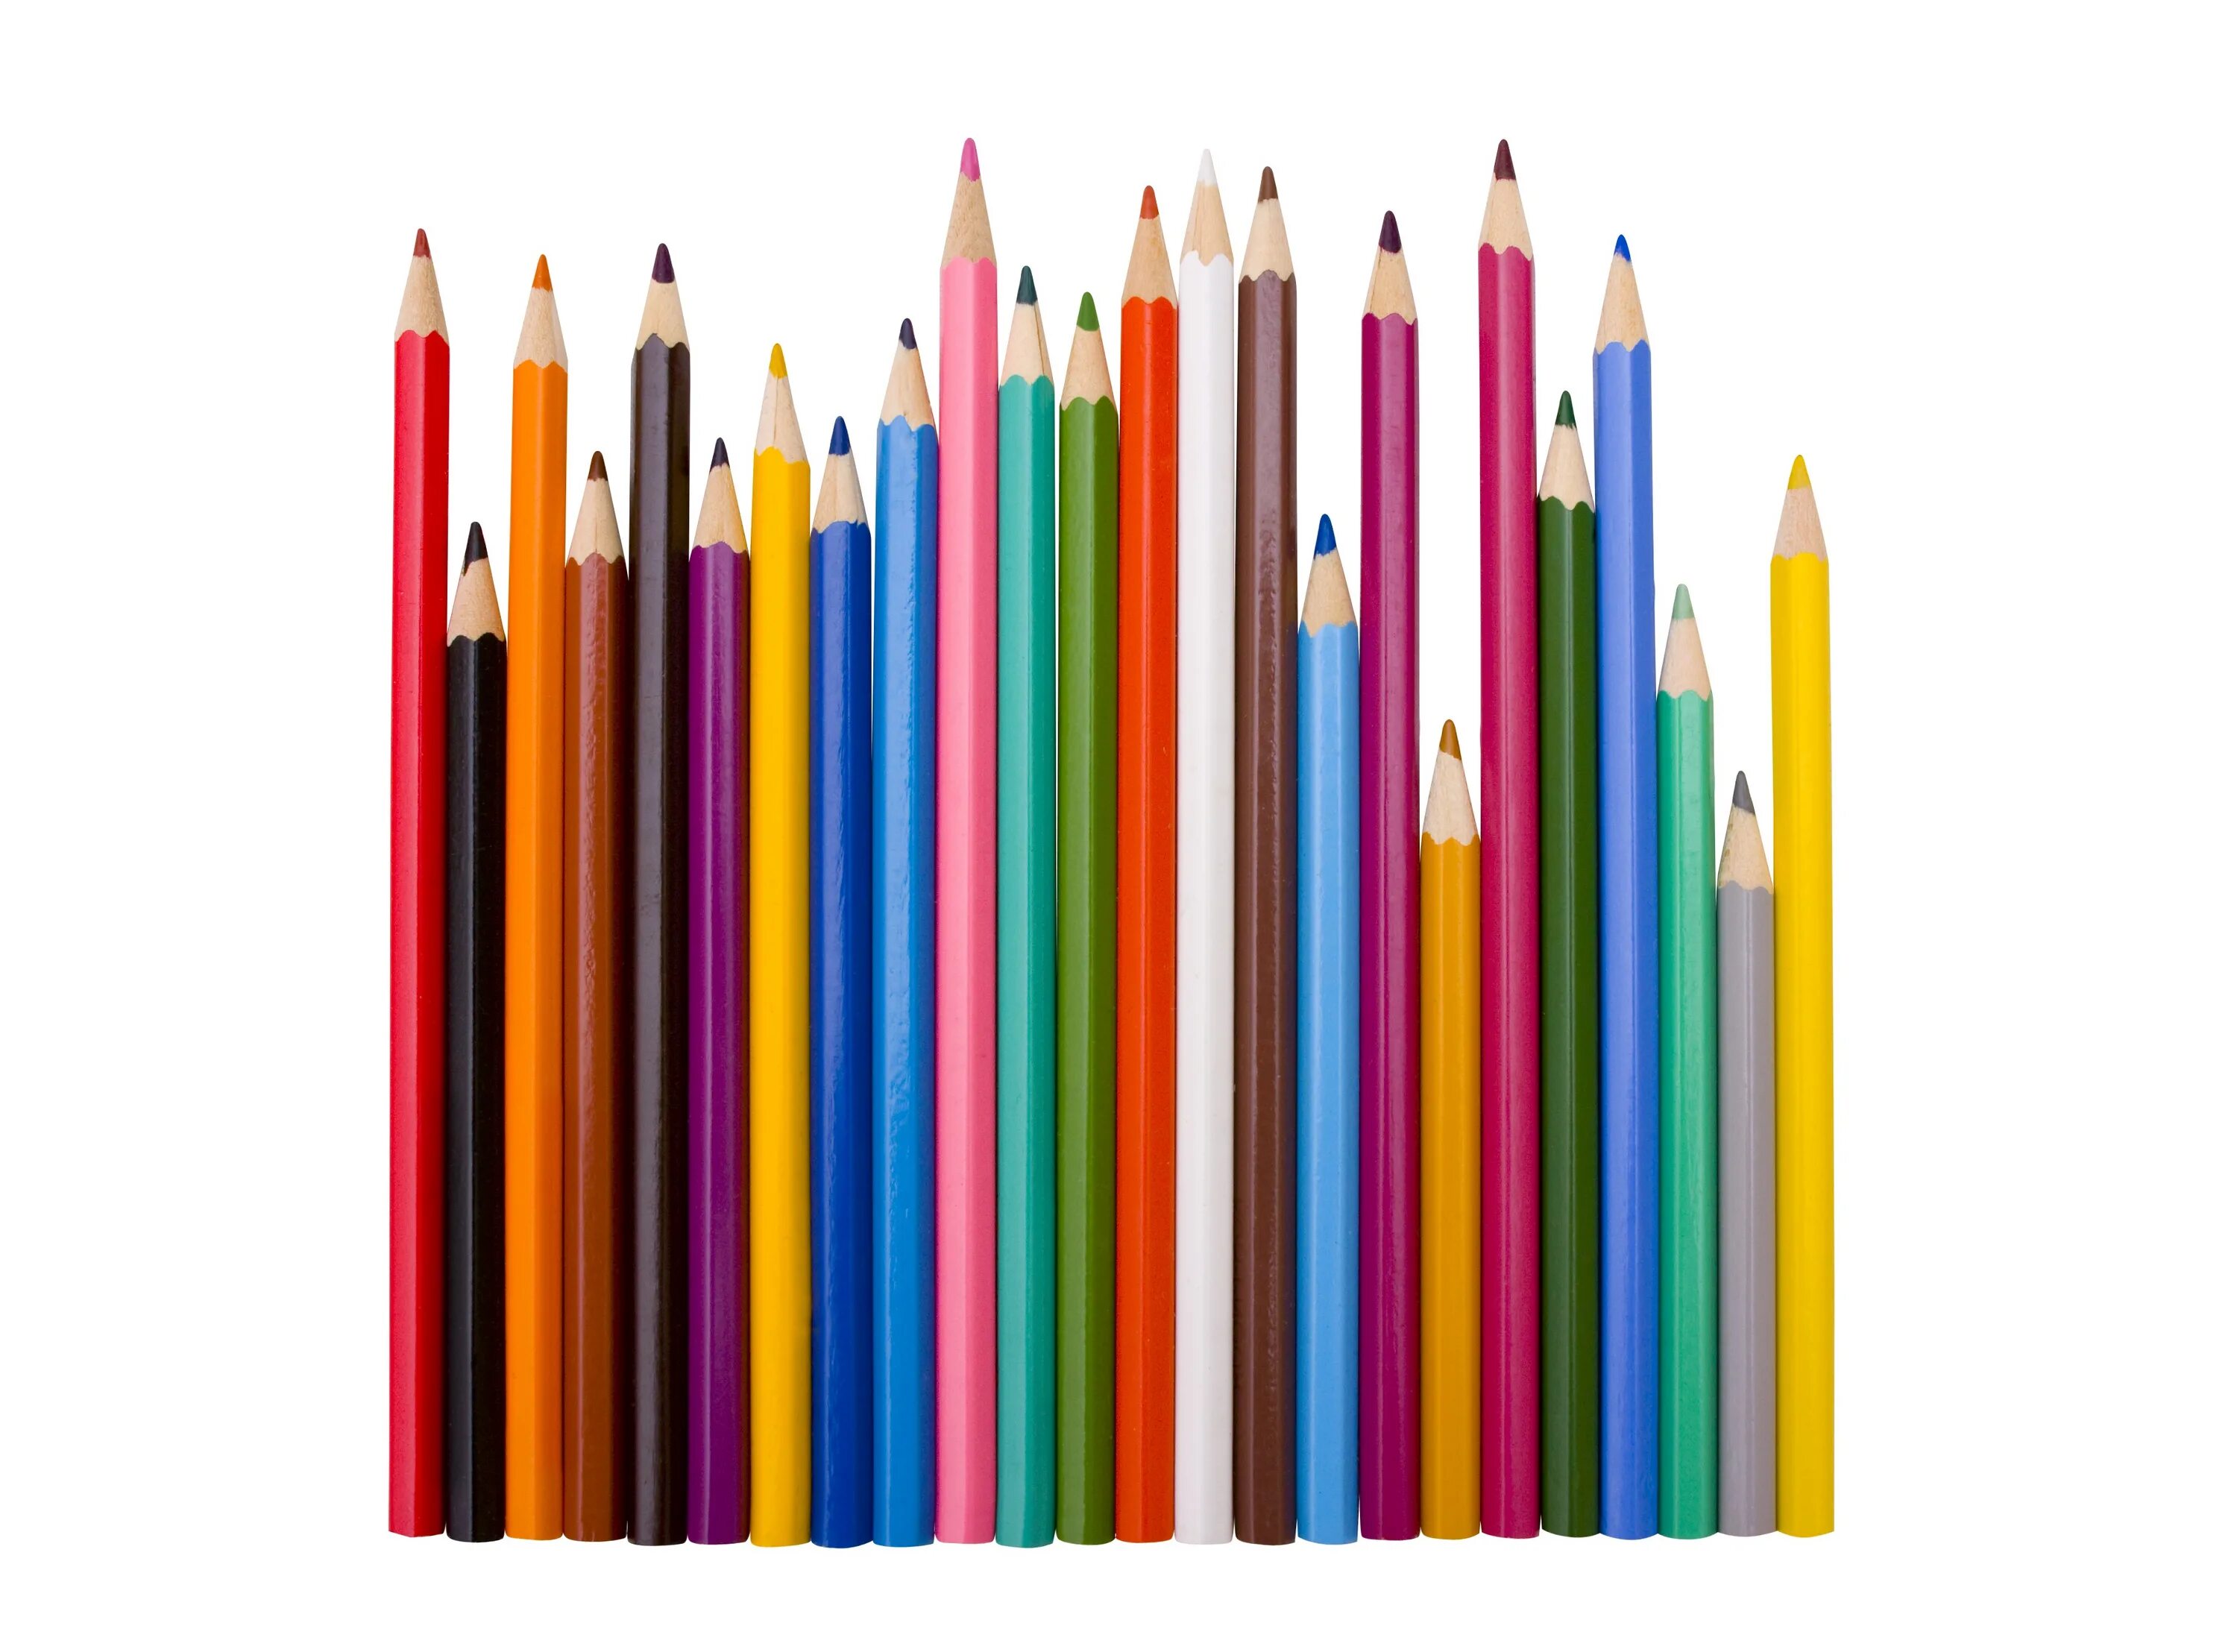 Карандаш на белом фоне. Цветные карандаши на белом фоне. Куча карандашей. Карандаши цветные.